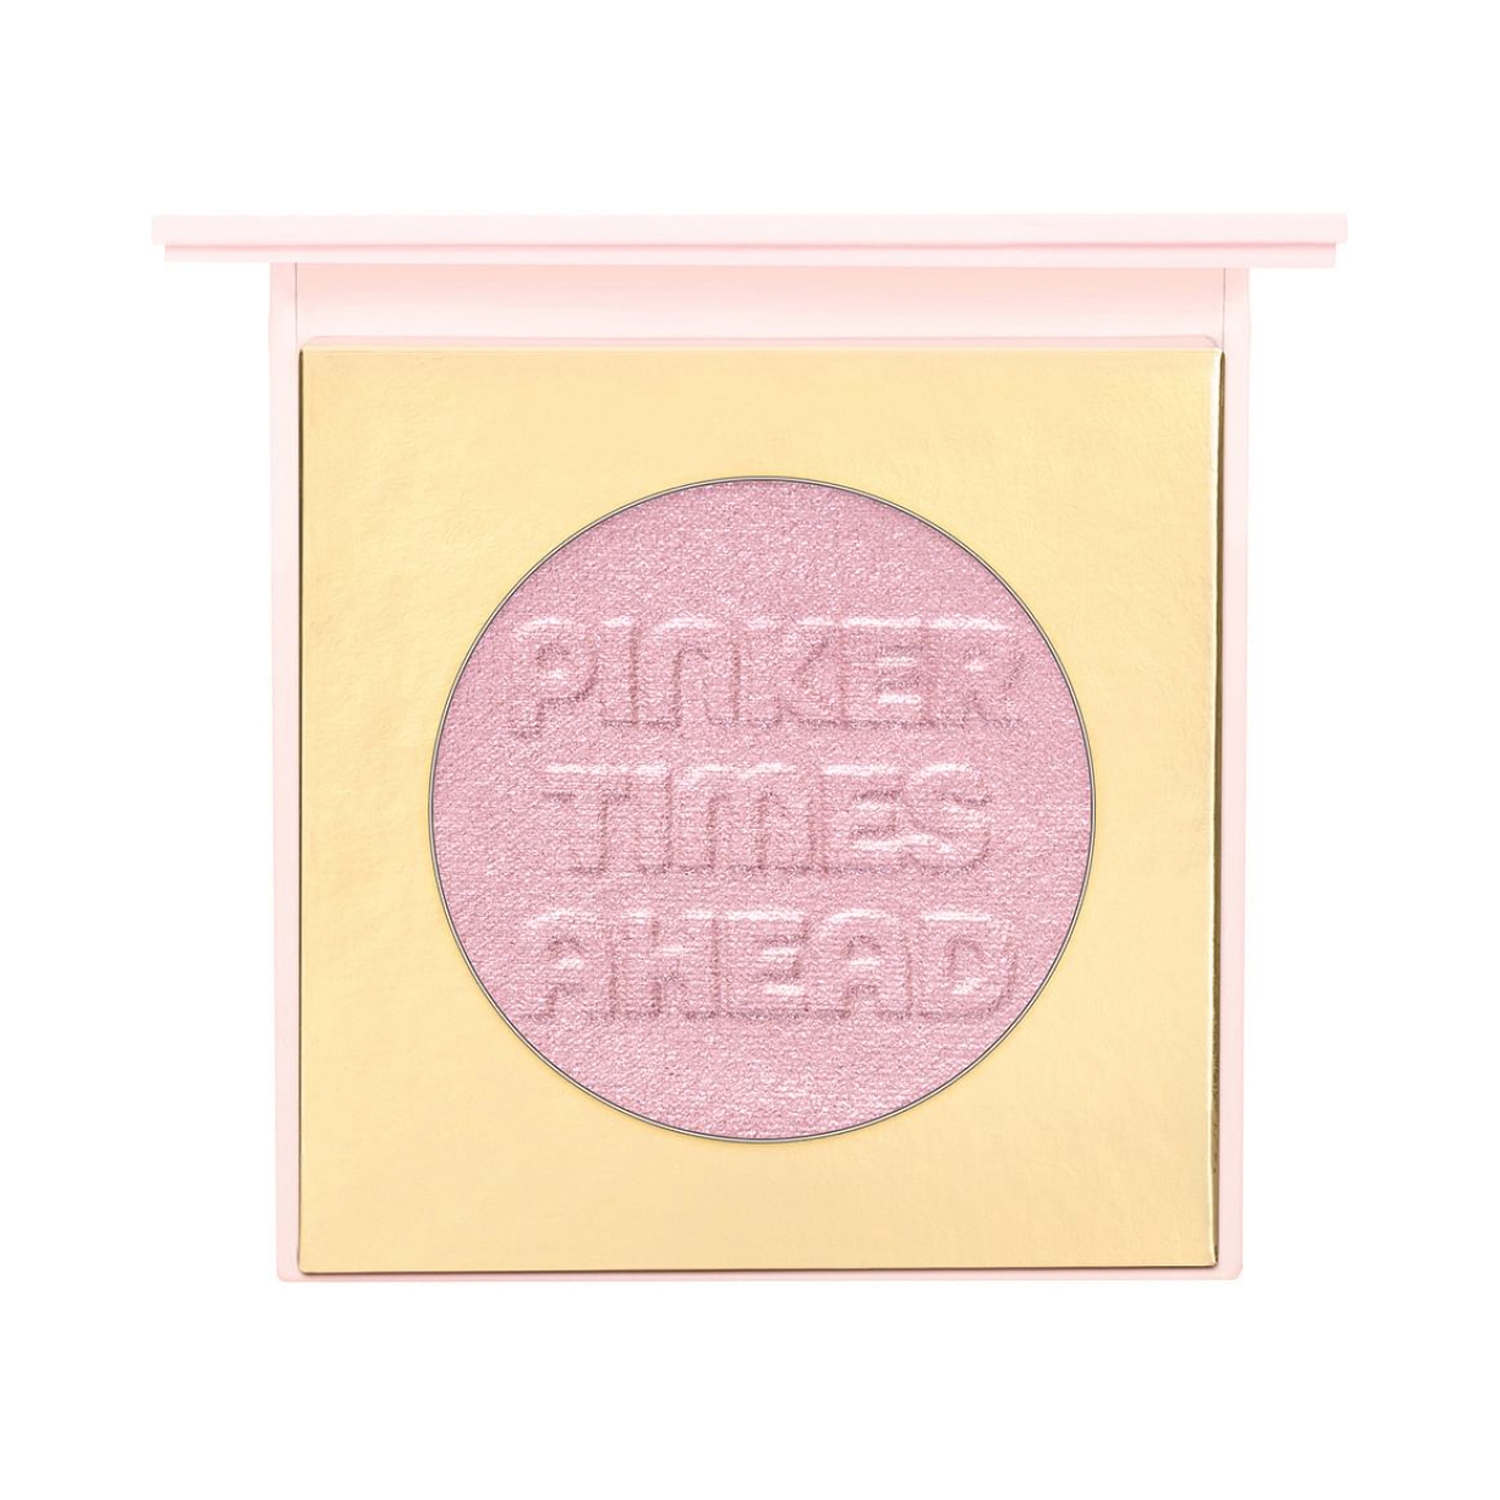 Too Faced Cheek Popper Blushing Highlighter - Pinker Times Ahead (3.4g)